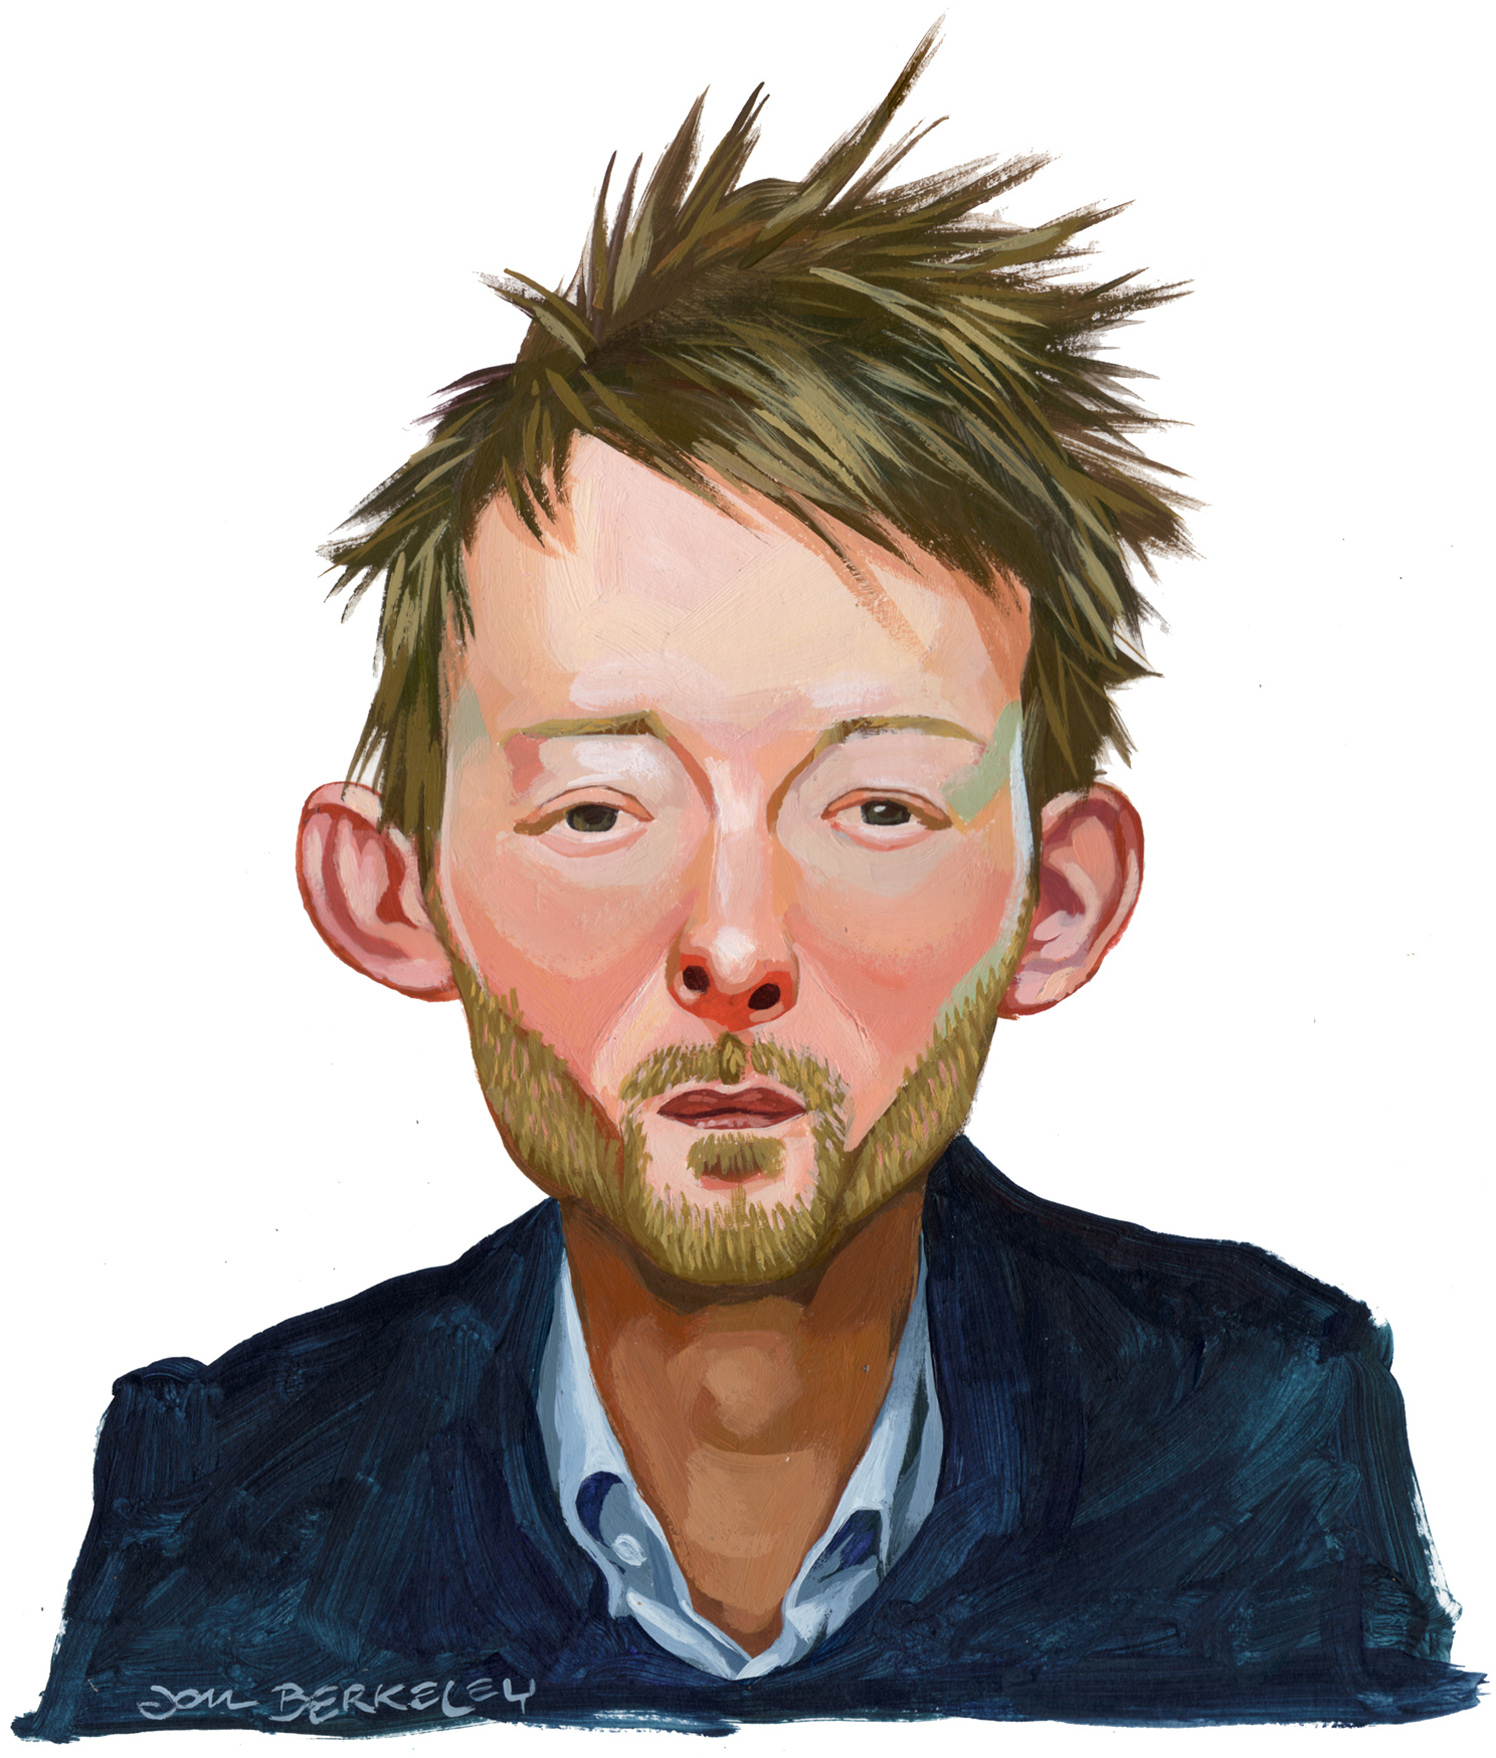 Thom Yorke